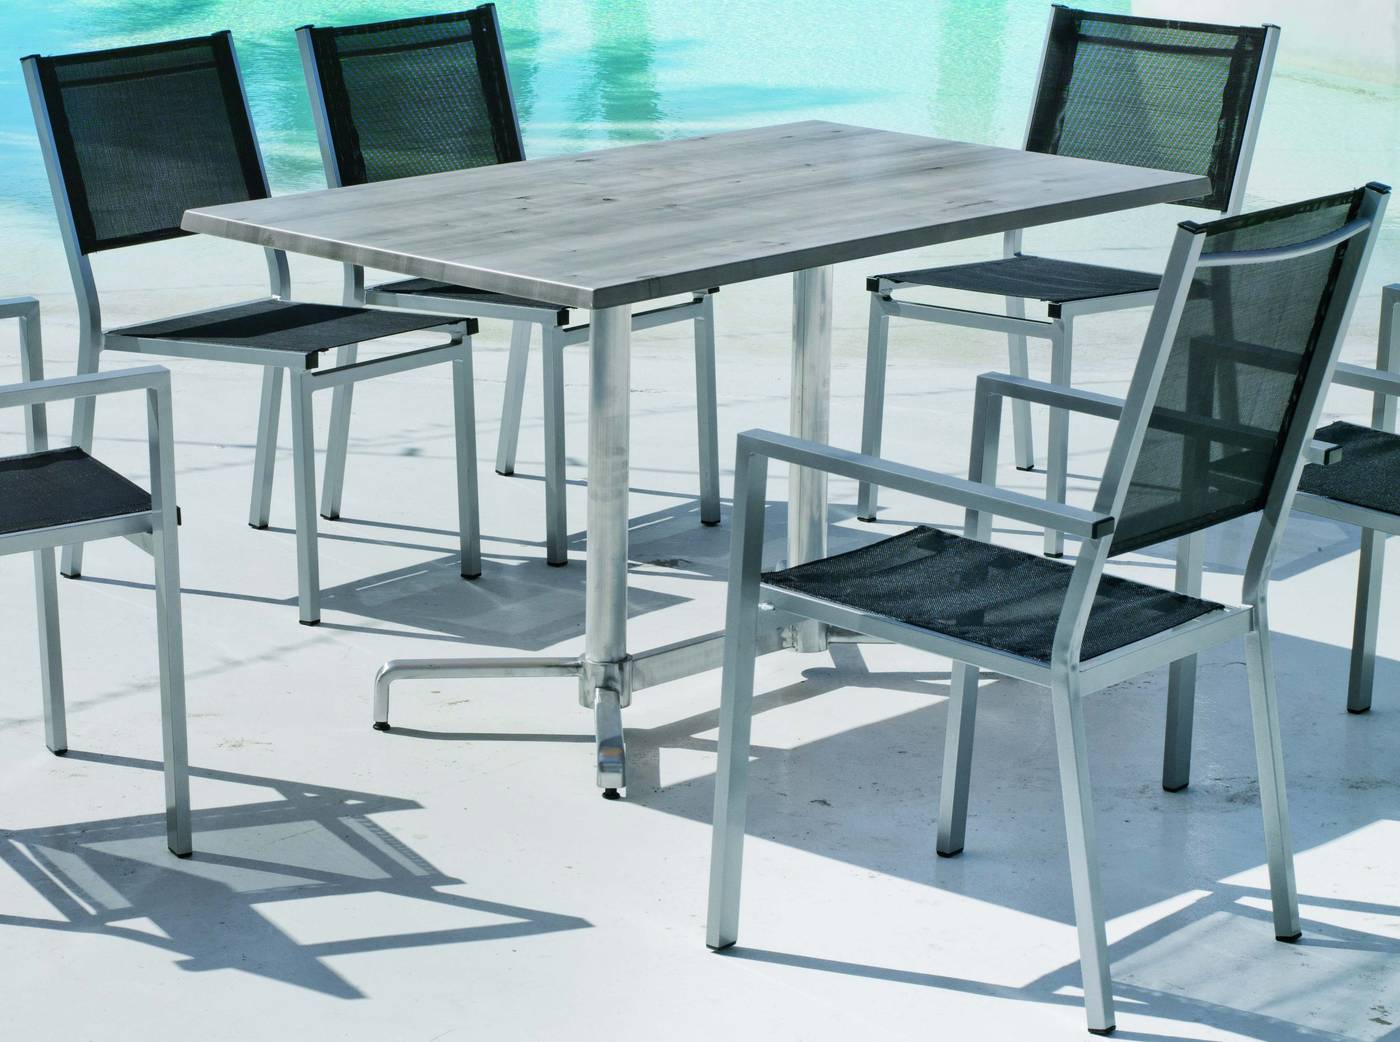 Set Aluminio Lieja/Roma-140/6 - Conjunto aluminio: mesa rectangular de 140 cm. con tablero de heverzaplus y 6 sillones de aluminio color plata y textilen color gris